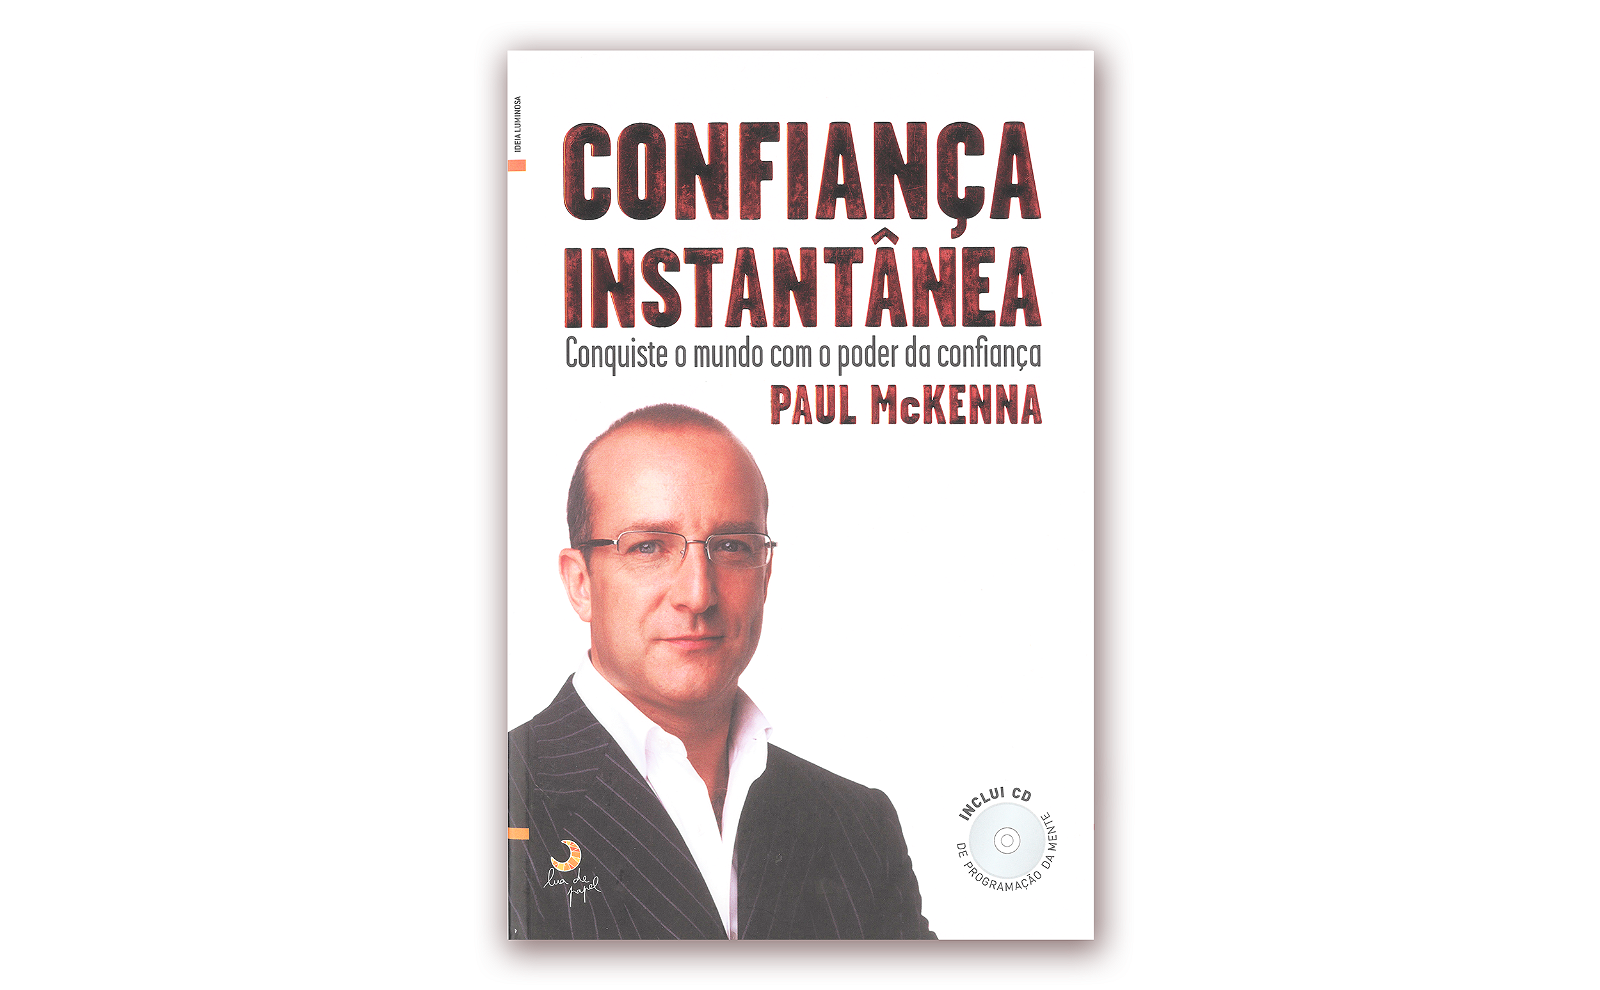 Paul McKenna - "CONFIANÇA INSTANTÂNEA"